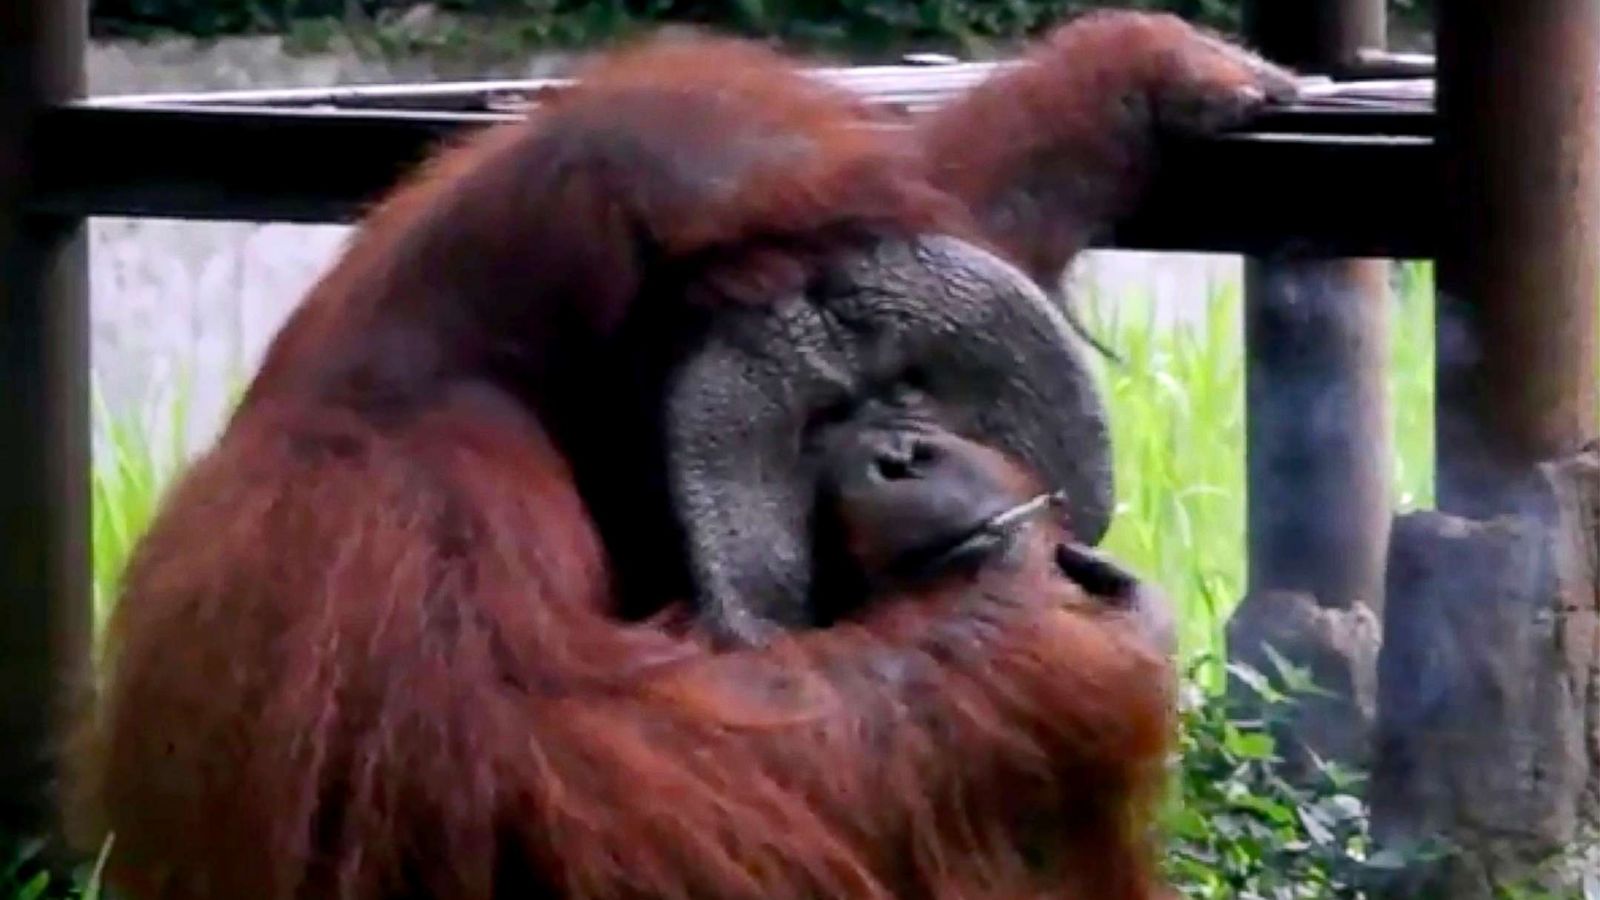 Smoking orangutan video goes viral, draws criticism from animal rights  activists - ABC News